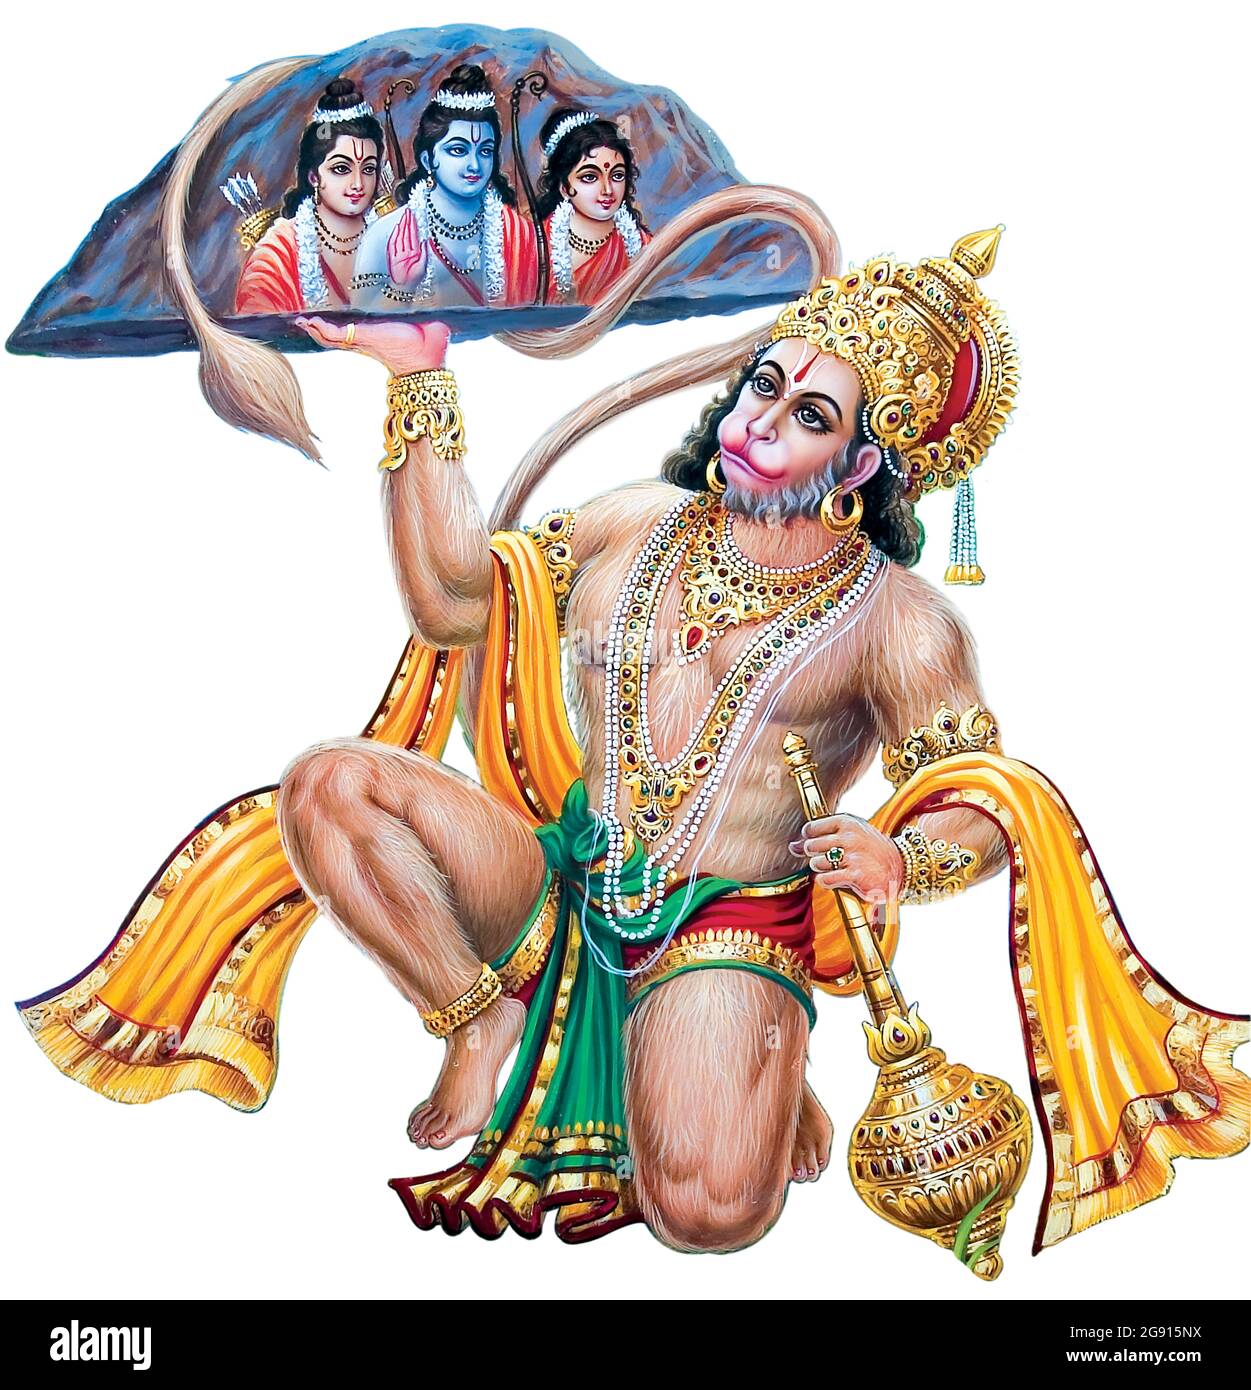 Jai hanuman images hi-res stock photography and images - Alamy